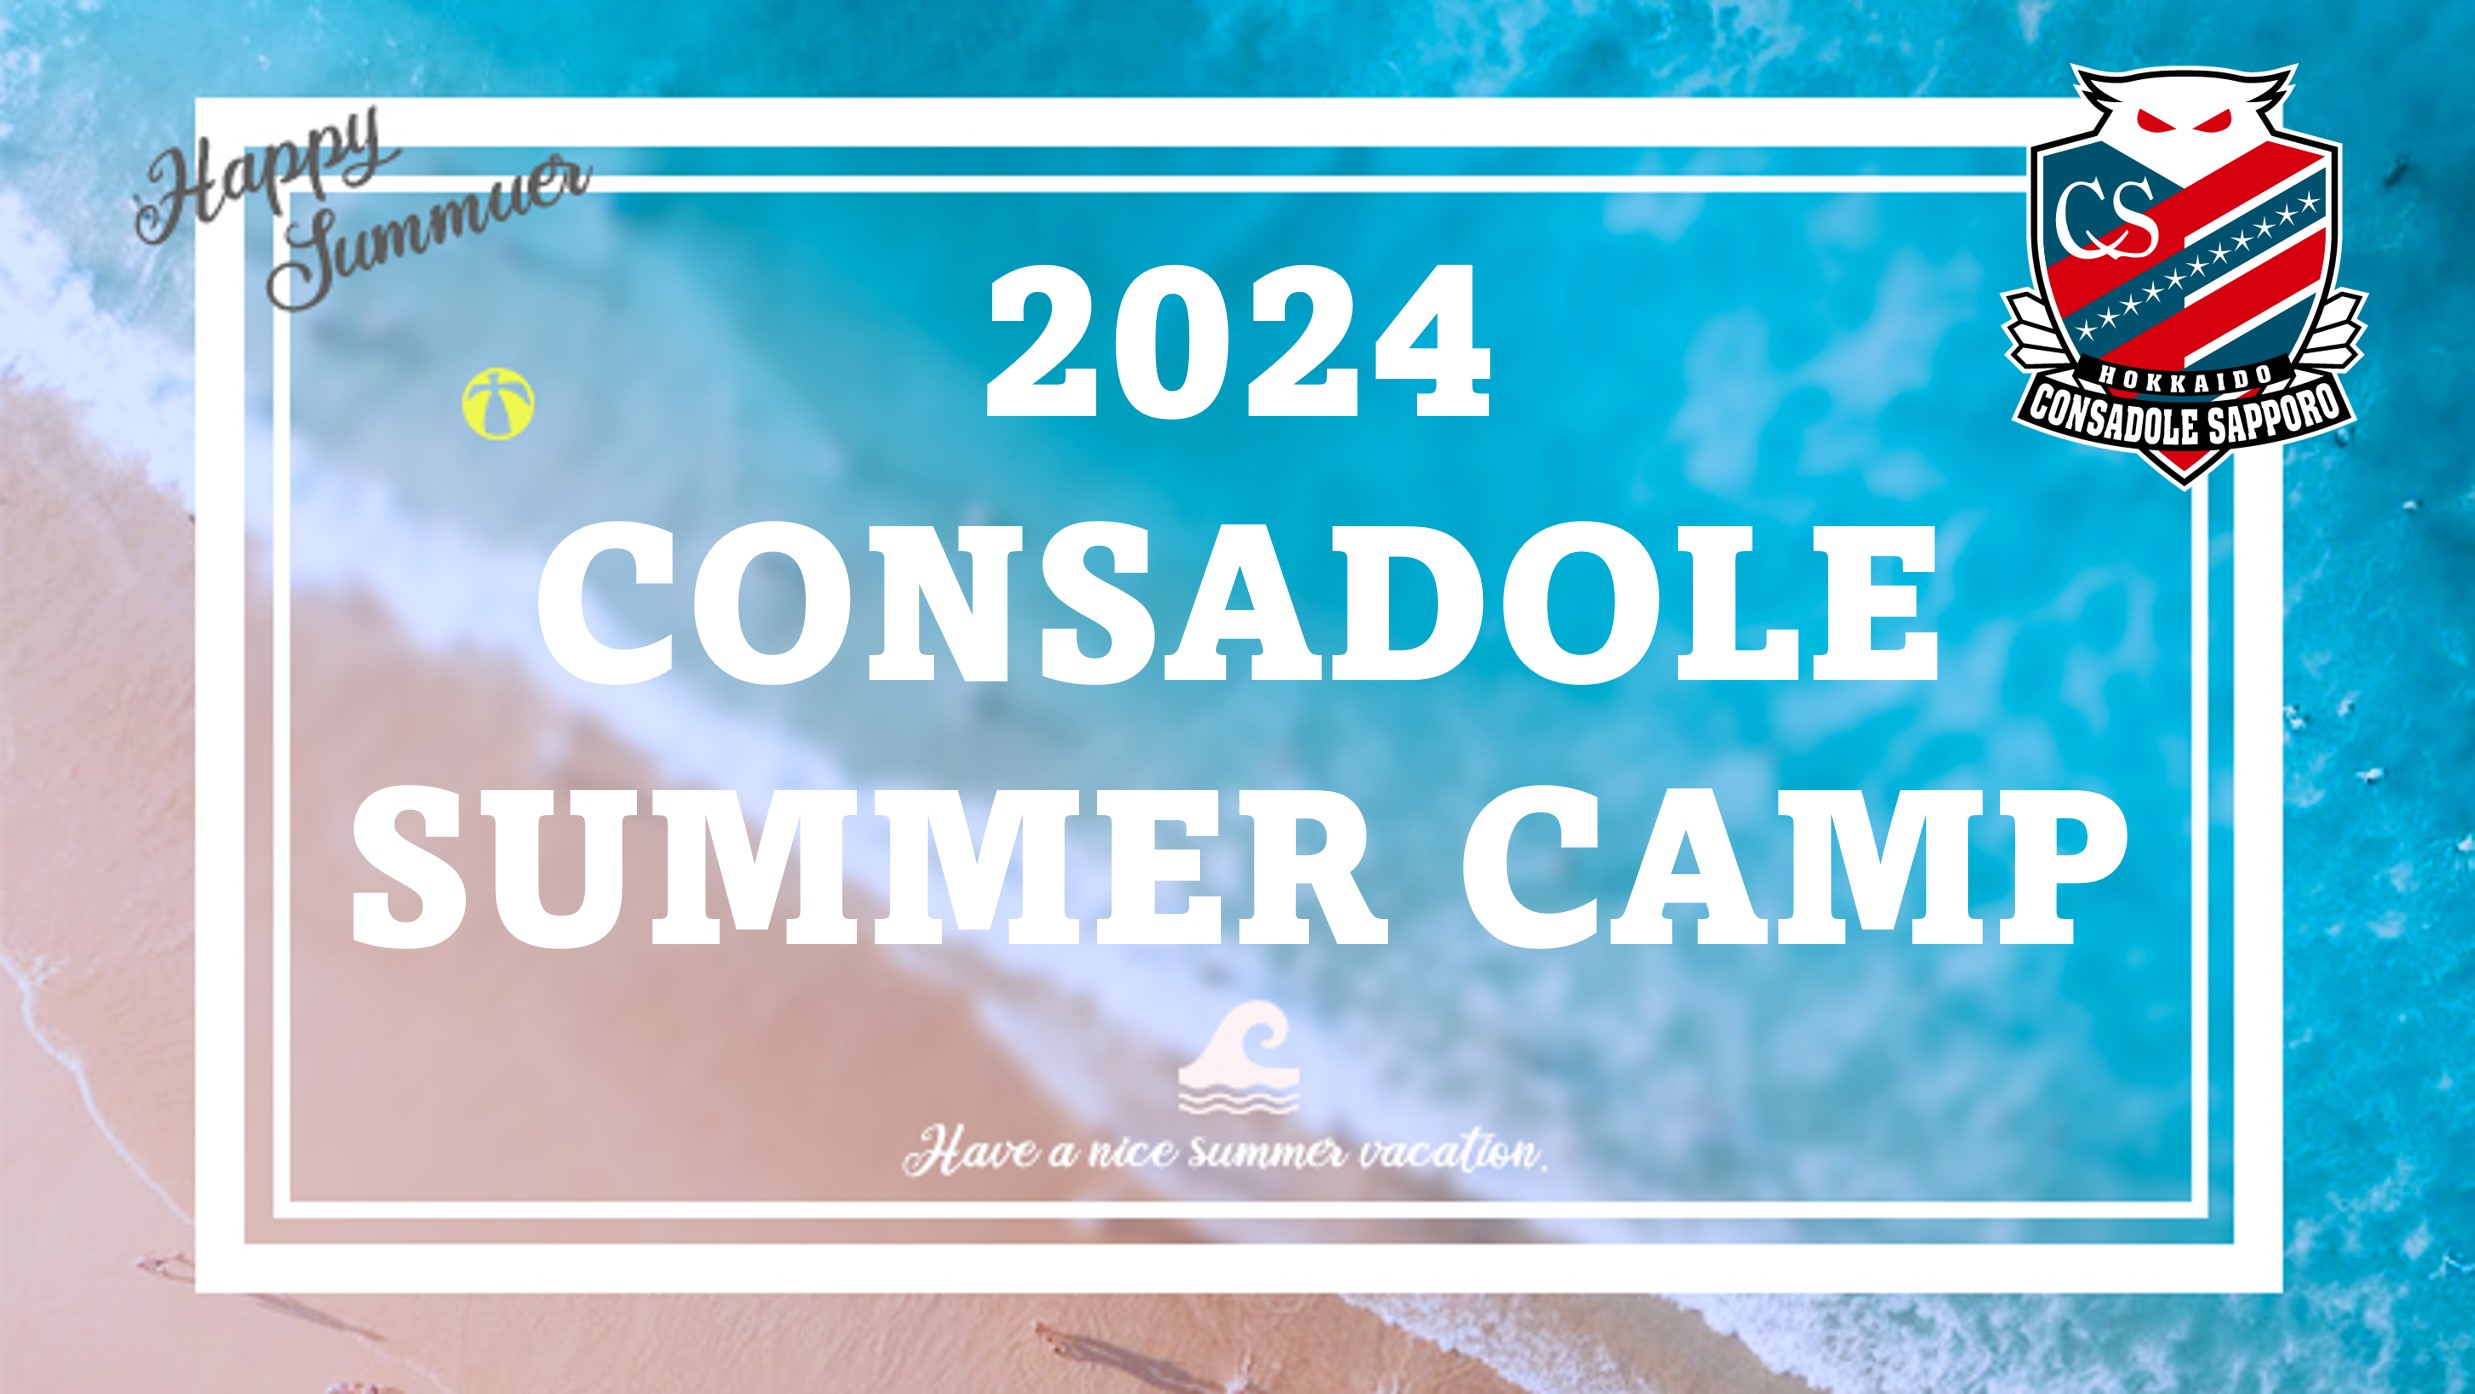 「CONSADOLE SUMMER CAMP 2024」開催のお知らせ※スクール生限定